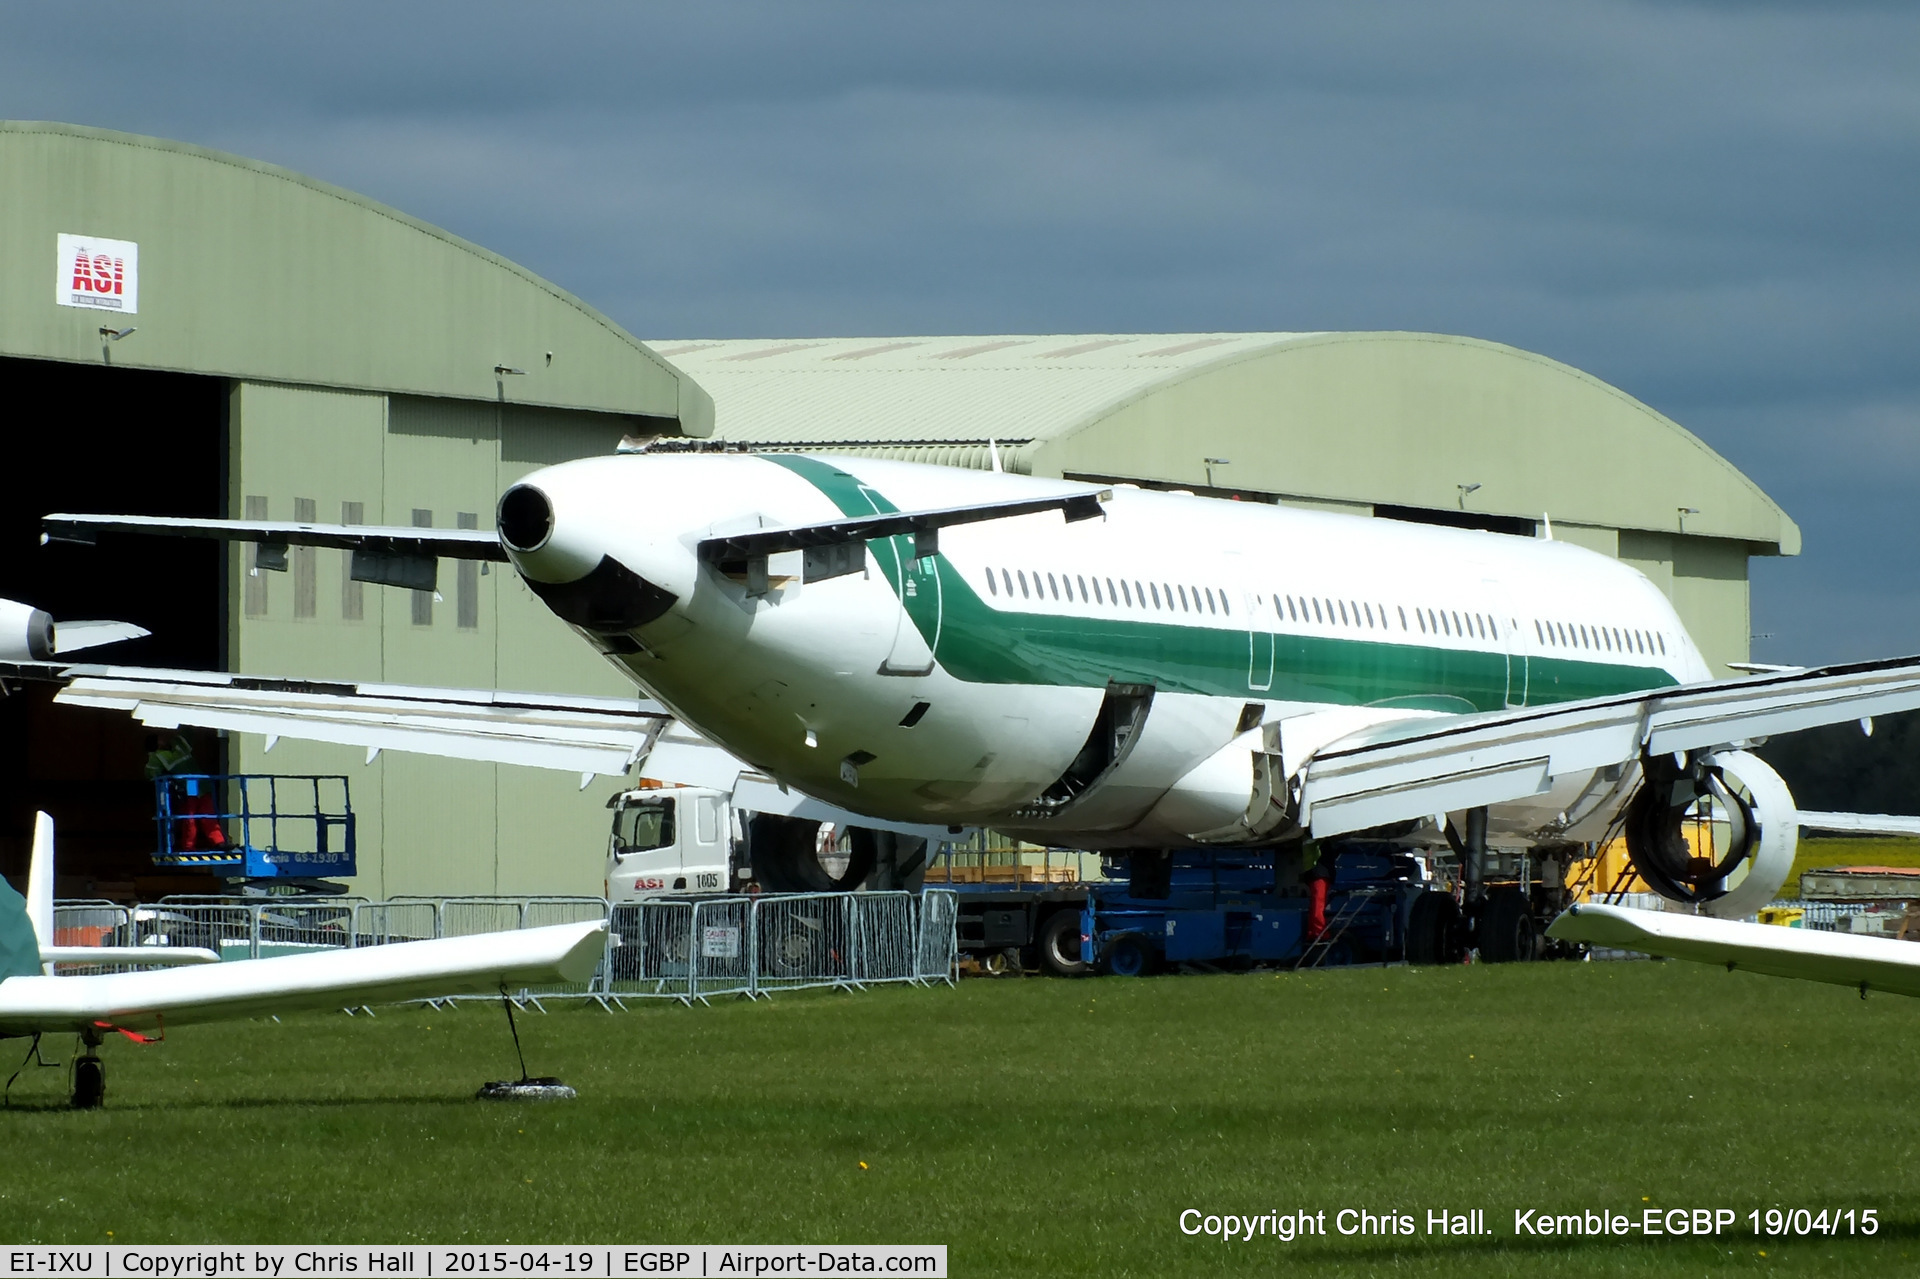 EI-IXU, 1993 Airbus A321-111 C/N 434, ex Alitalia, being scraped at Kemble